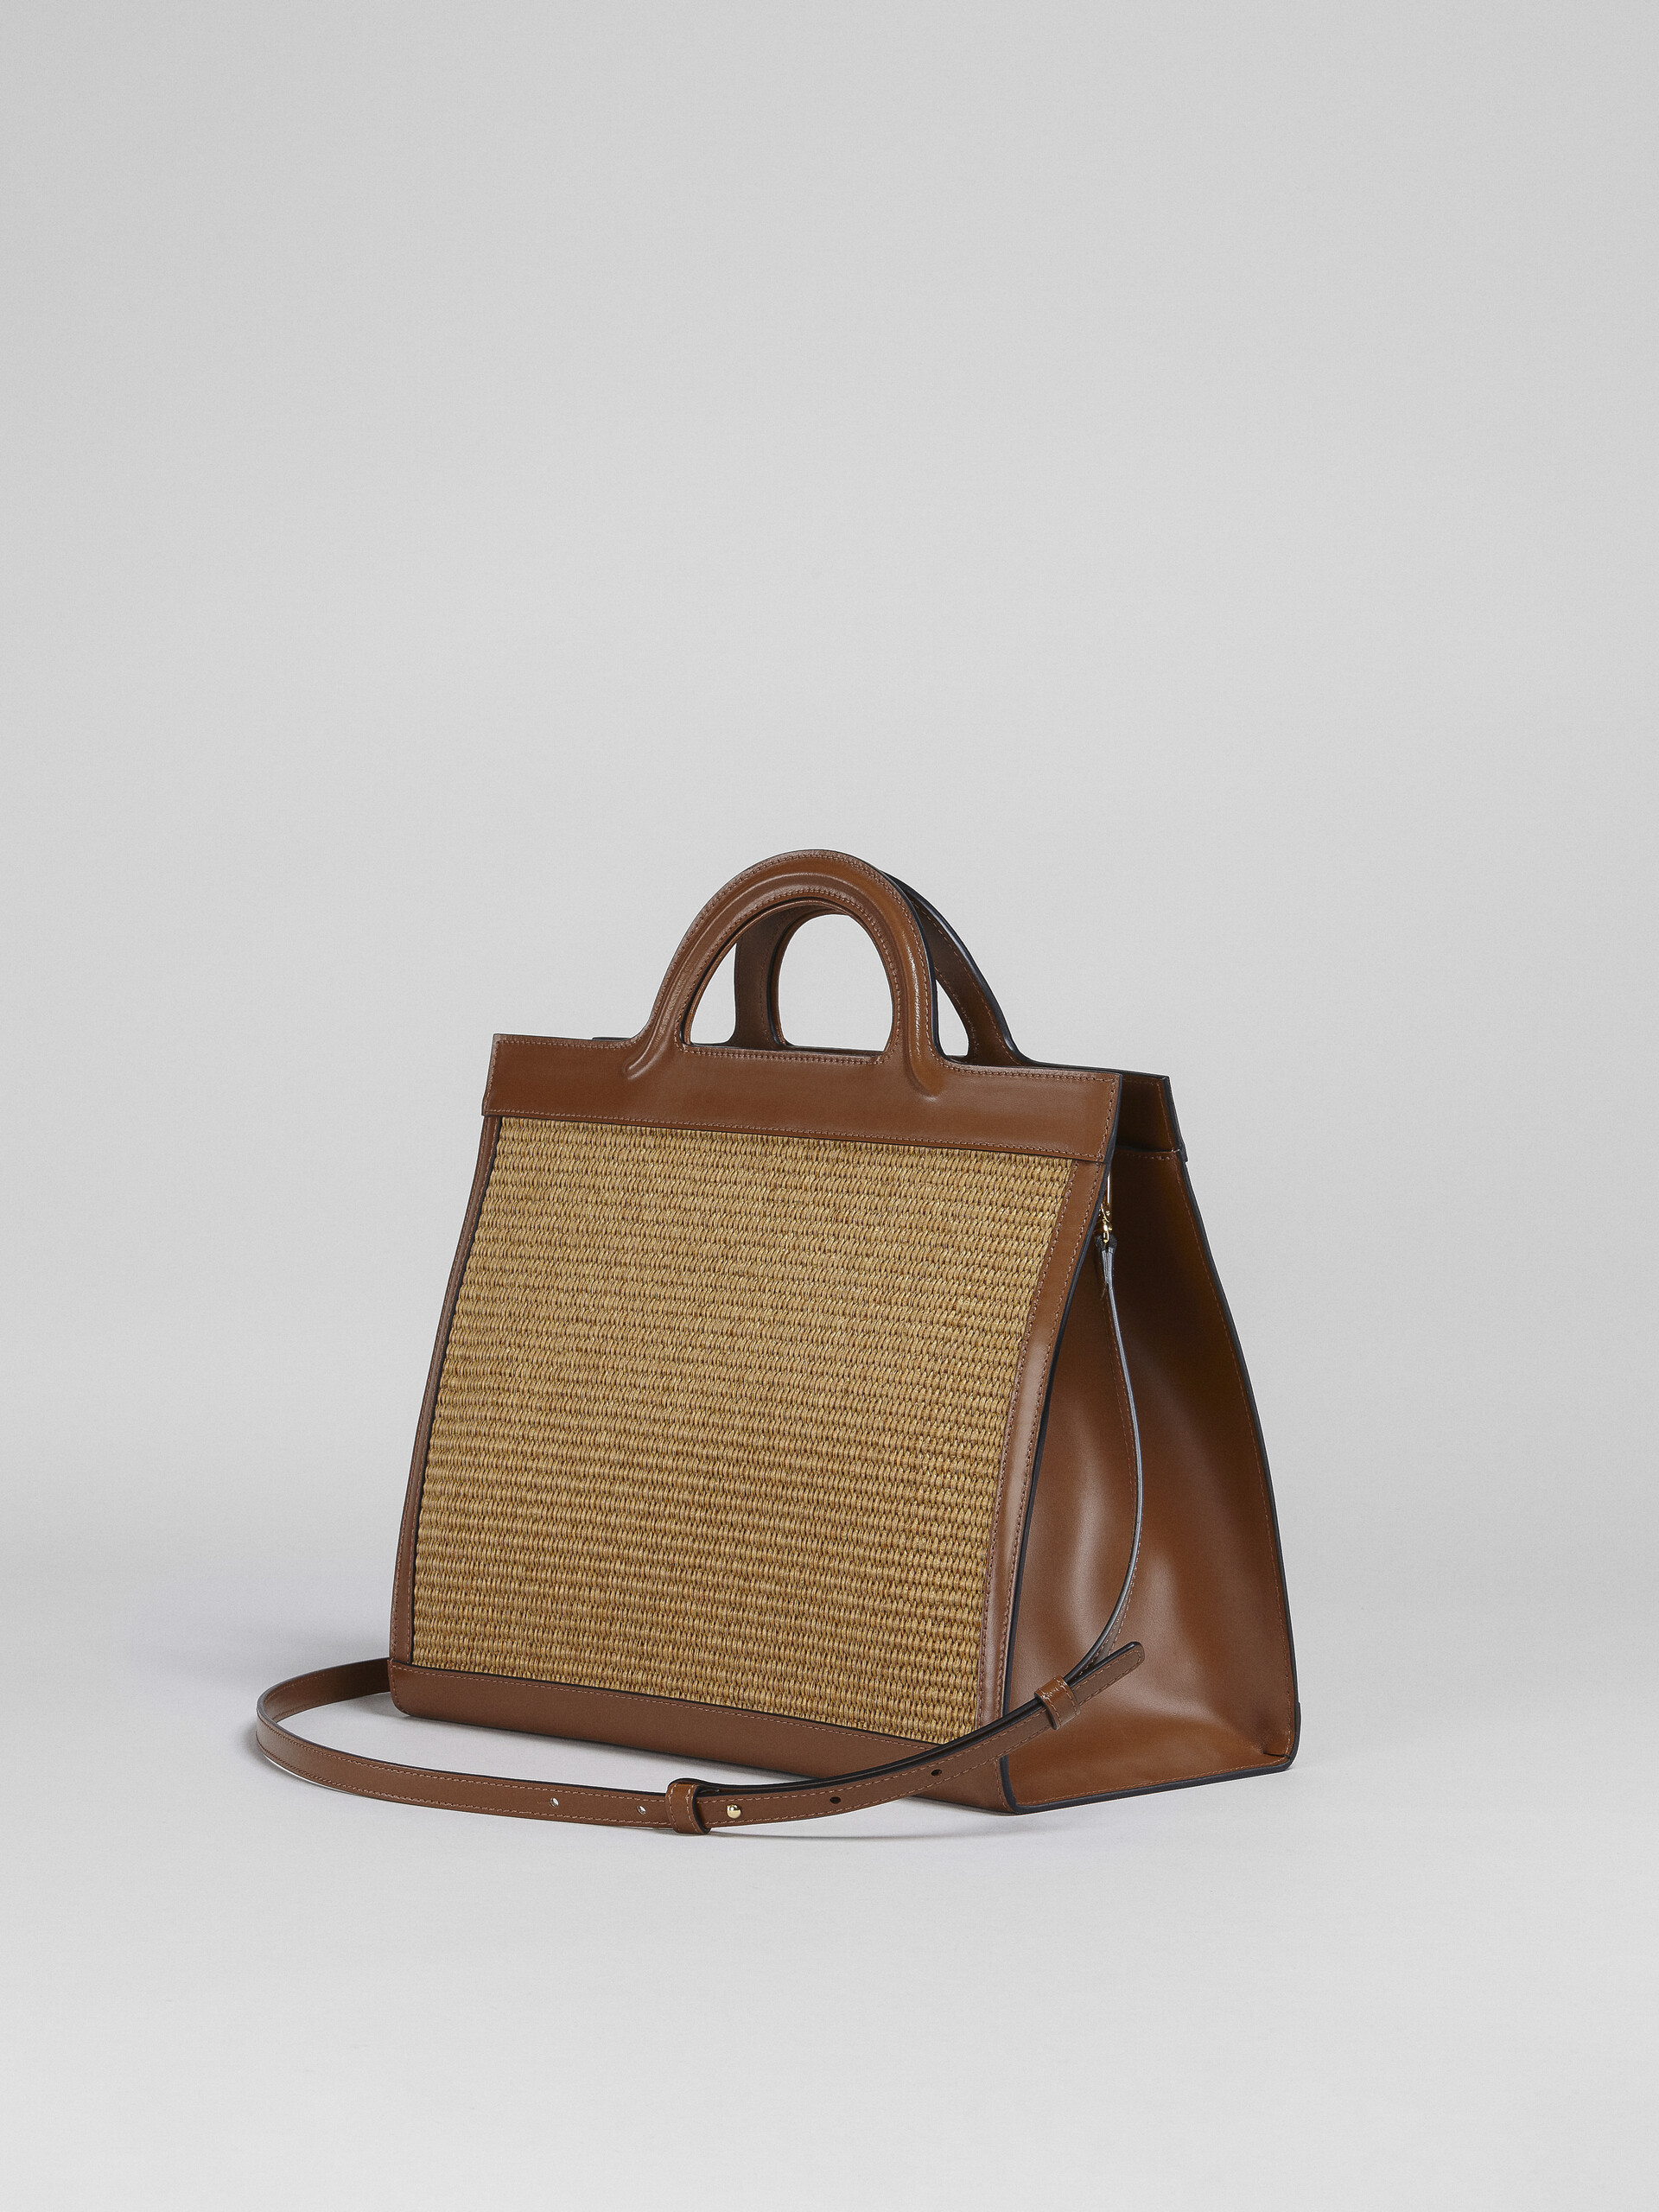 Leather and raffia TROPICALIA tote bag - Handbag - Image 3